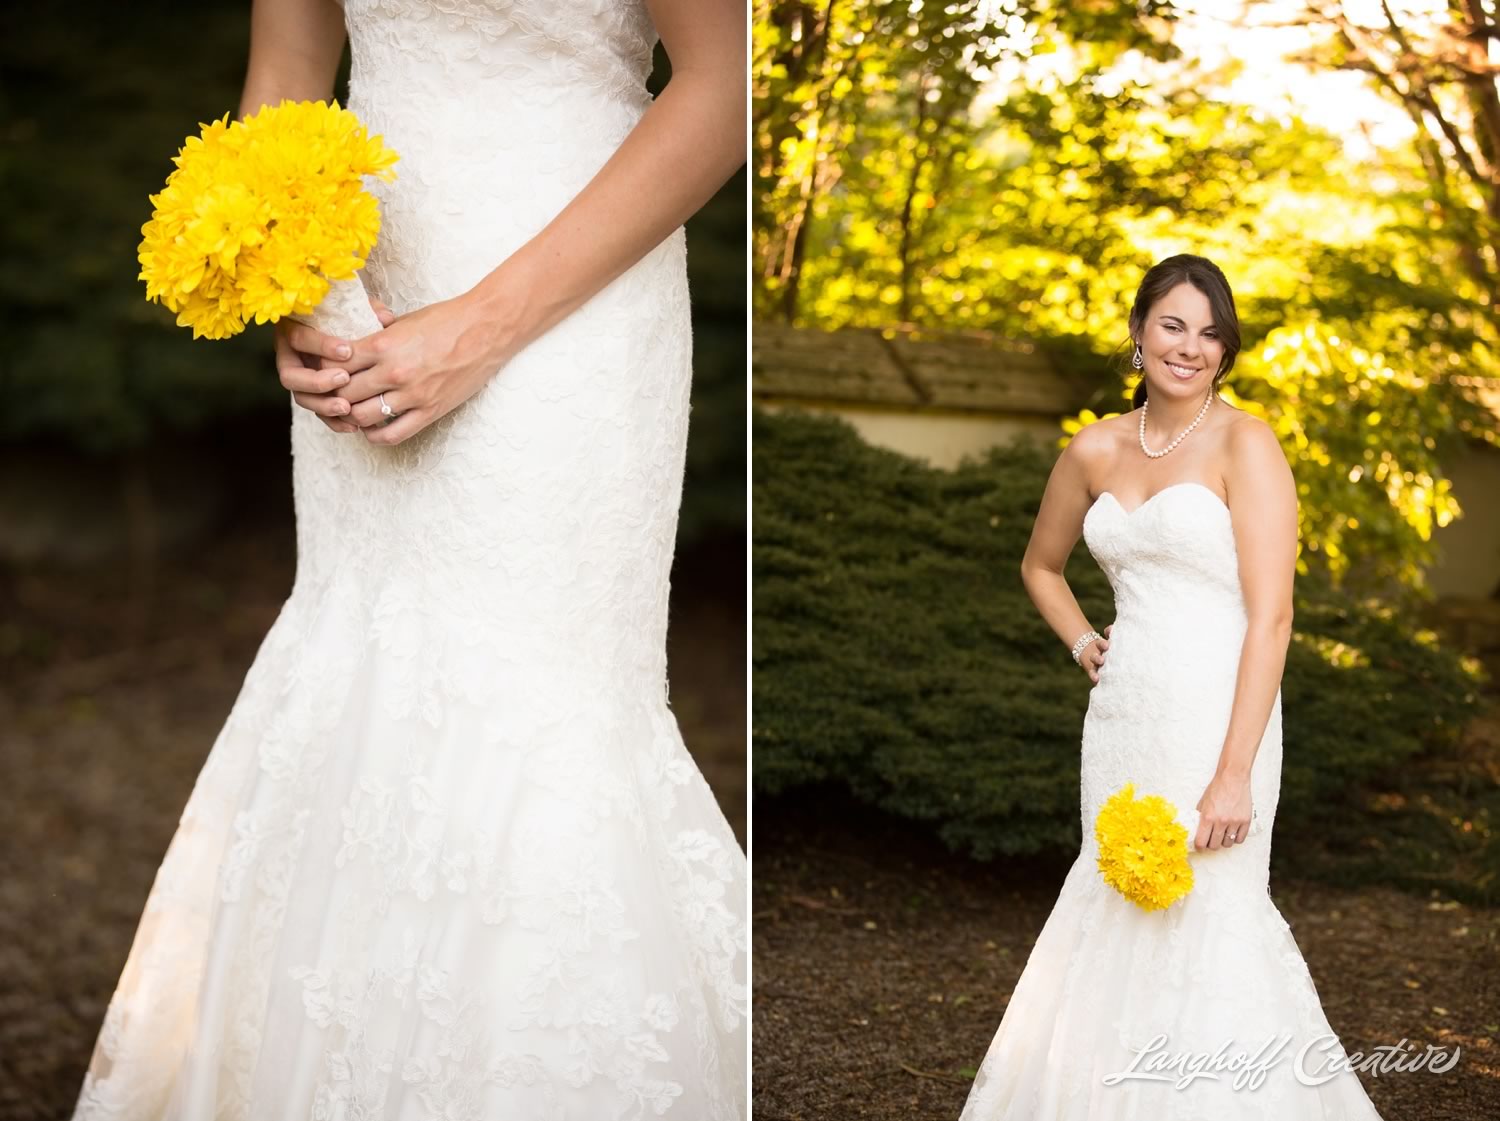 BridalSession-Bridals-RaleighBride-NCbride-JCRaulstonArboretum-RaleighWedding-WeddingPhotographer-LanghoffCreative-Amy2015-Bride-3-photo.jpg